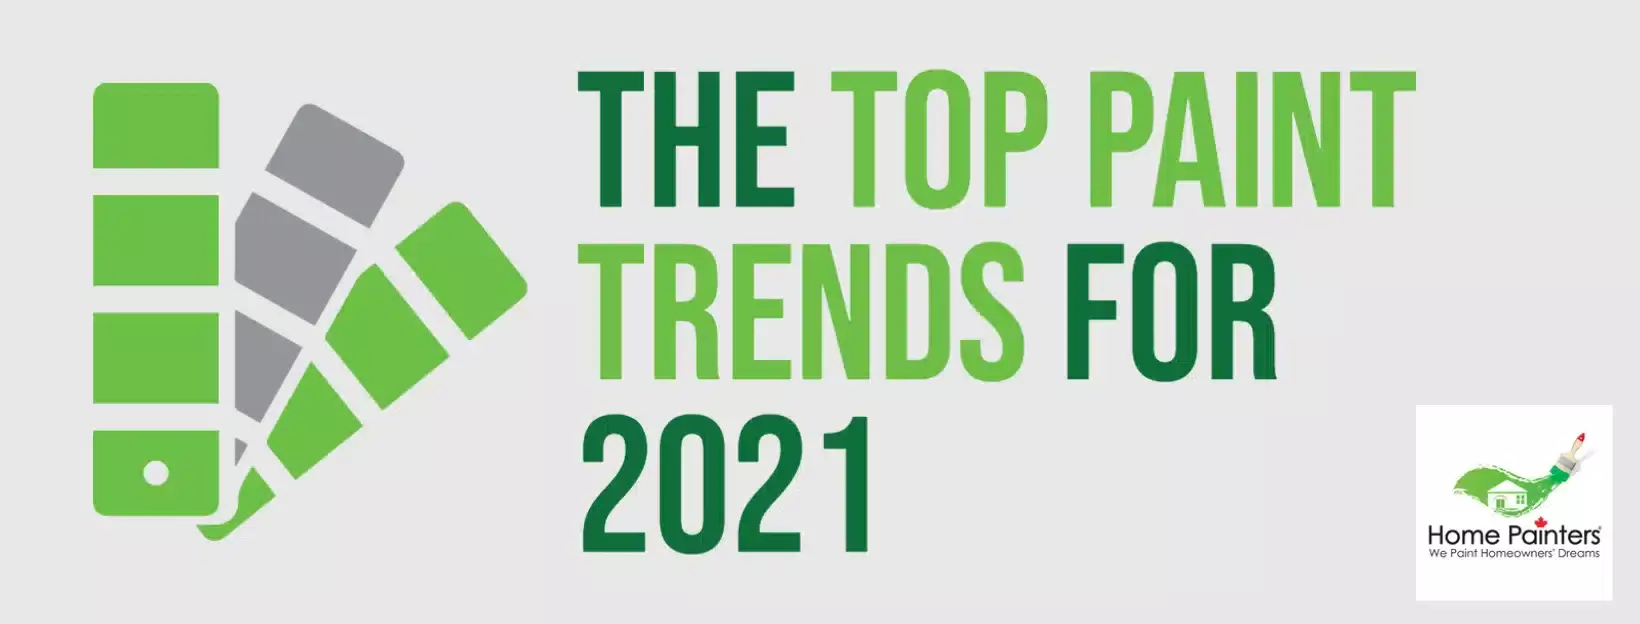 Top paint trends 2021